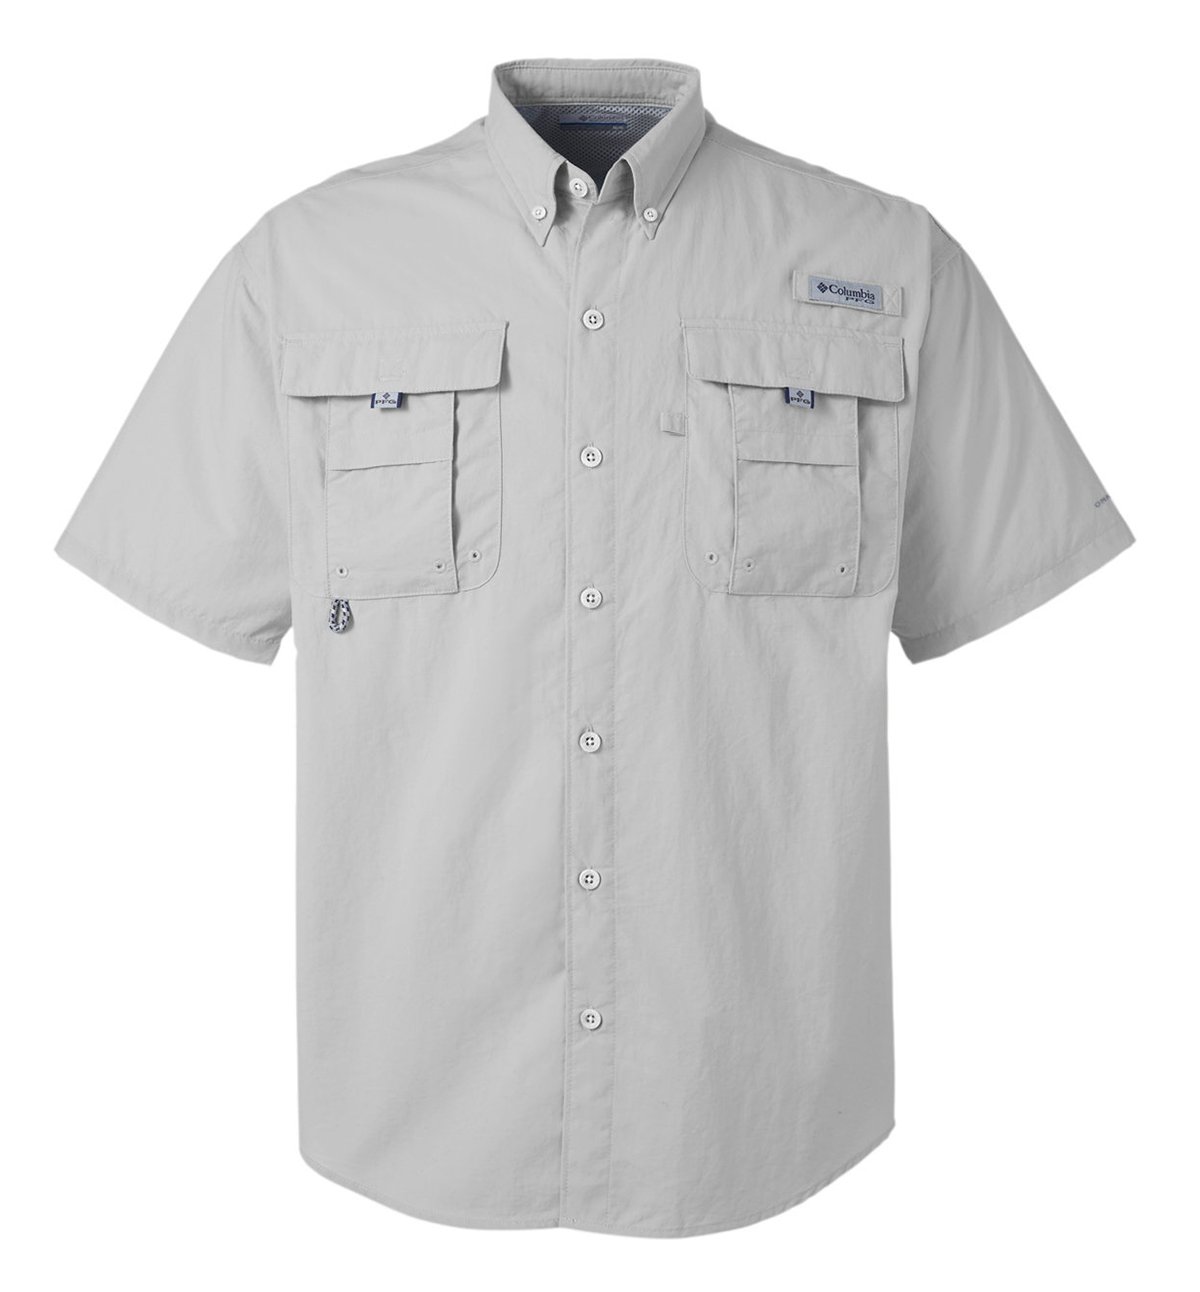 Columbia PFG outdoor Fishing Shirt short sleeve Men's L Red Vented 100%  cotton